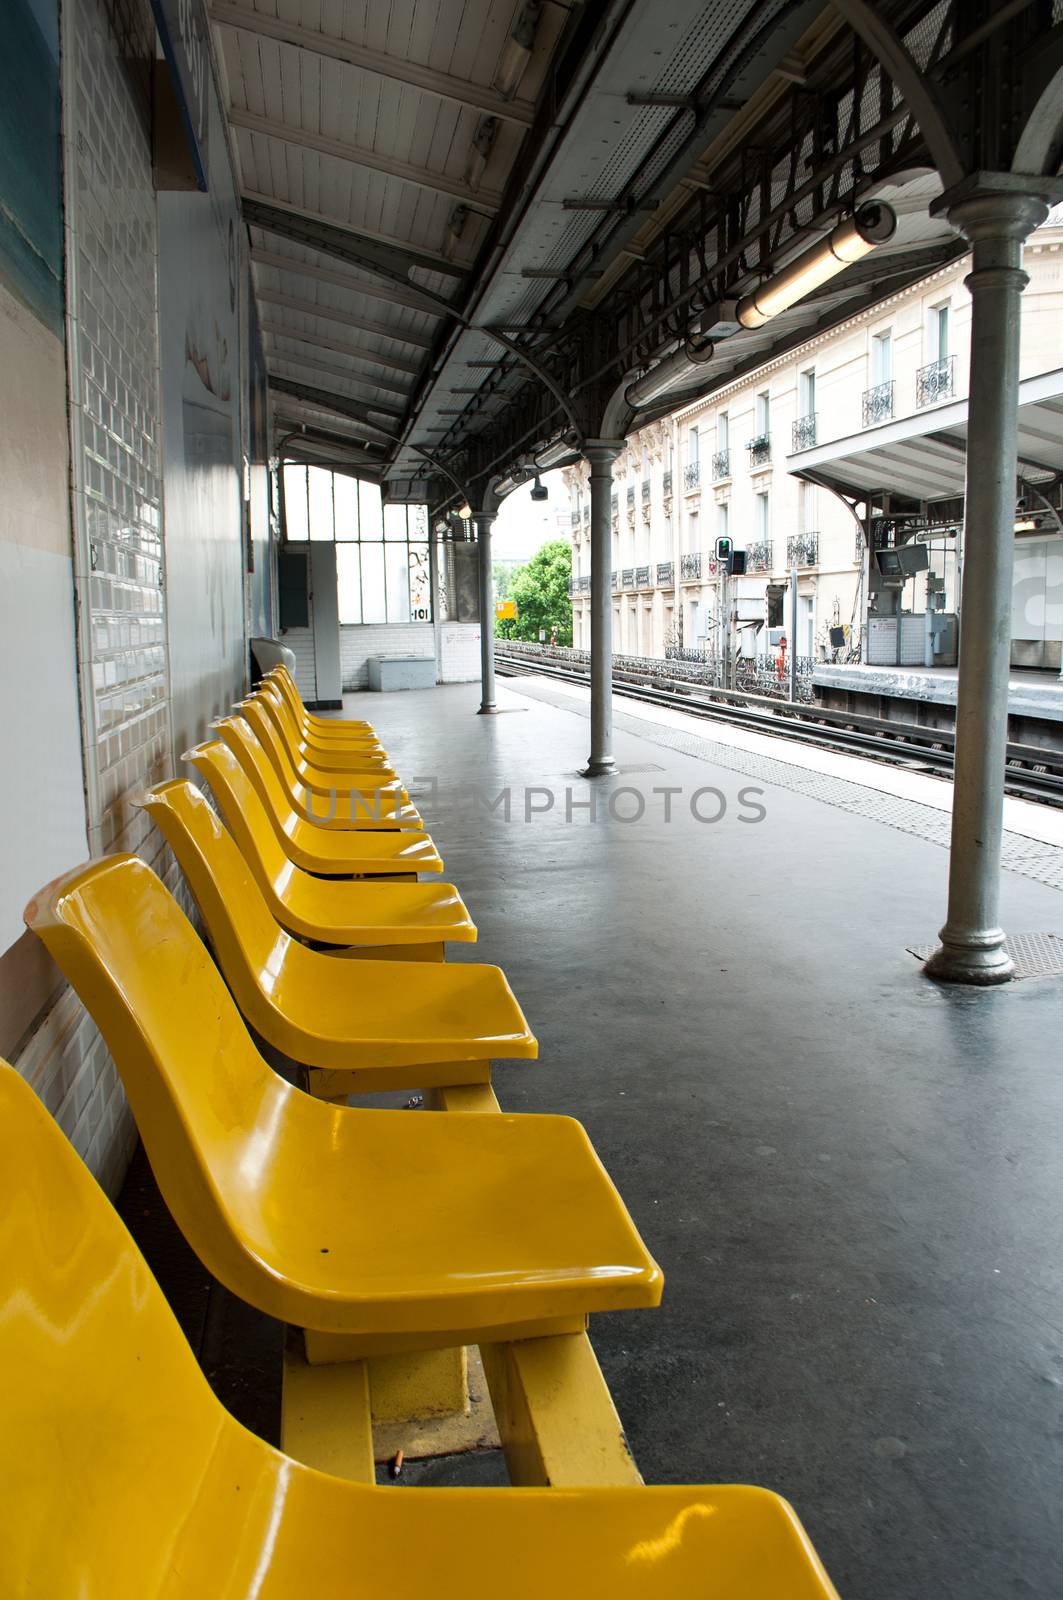 metropolitan station in Paris - France by NeydtStock